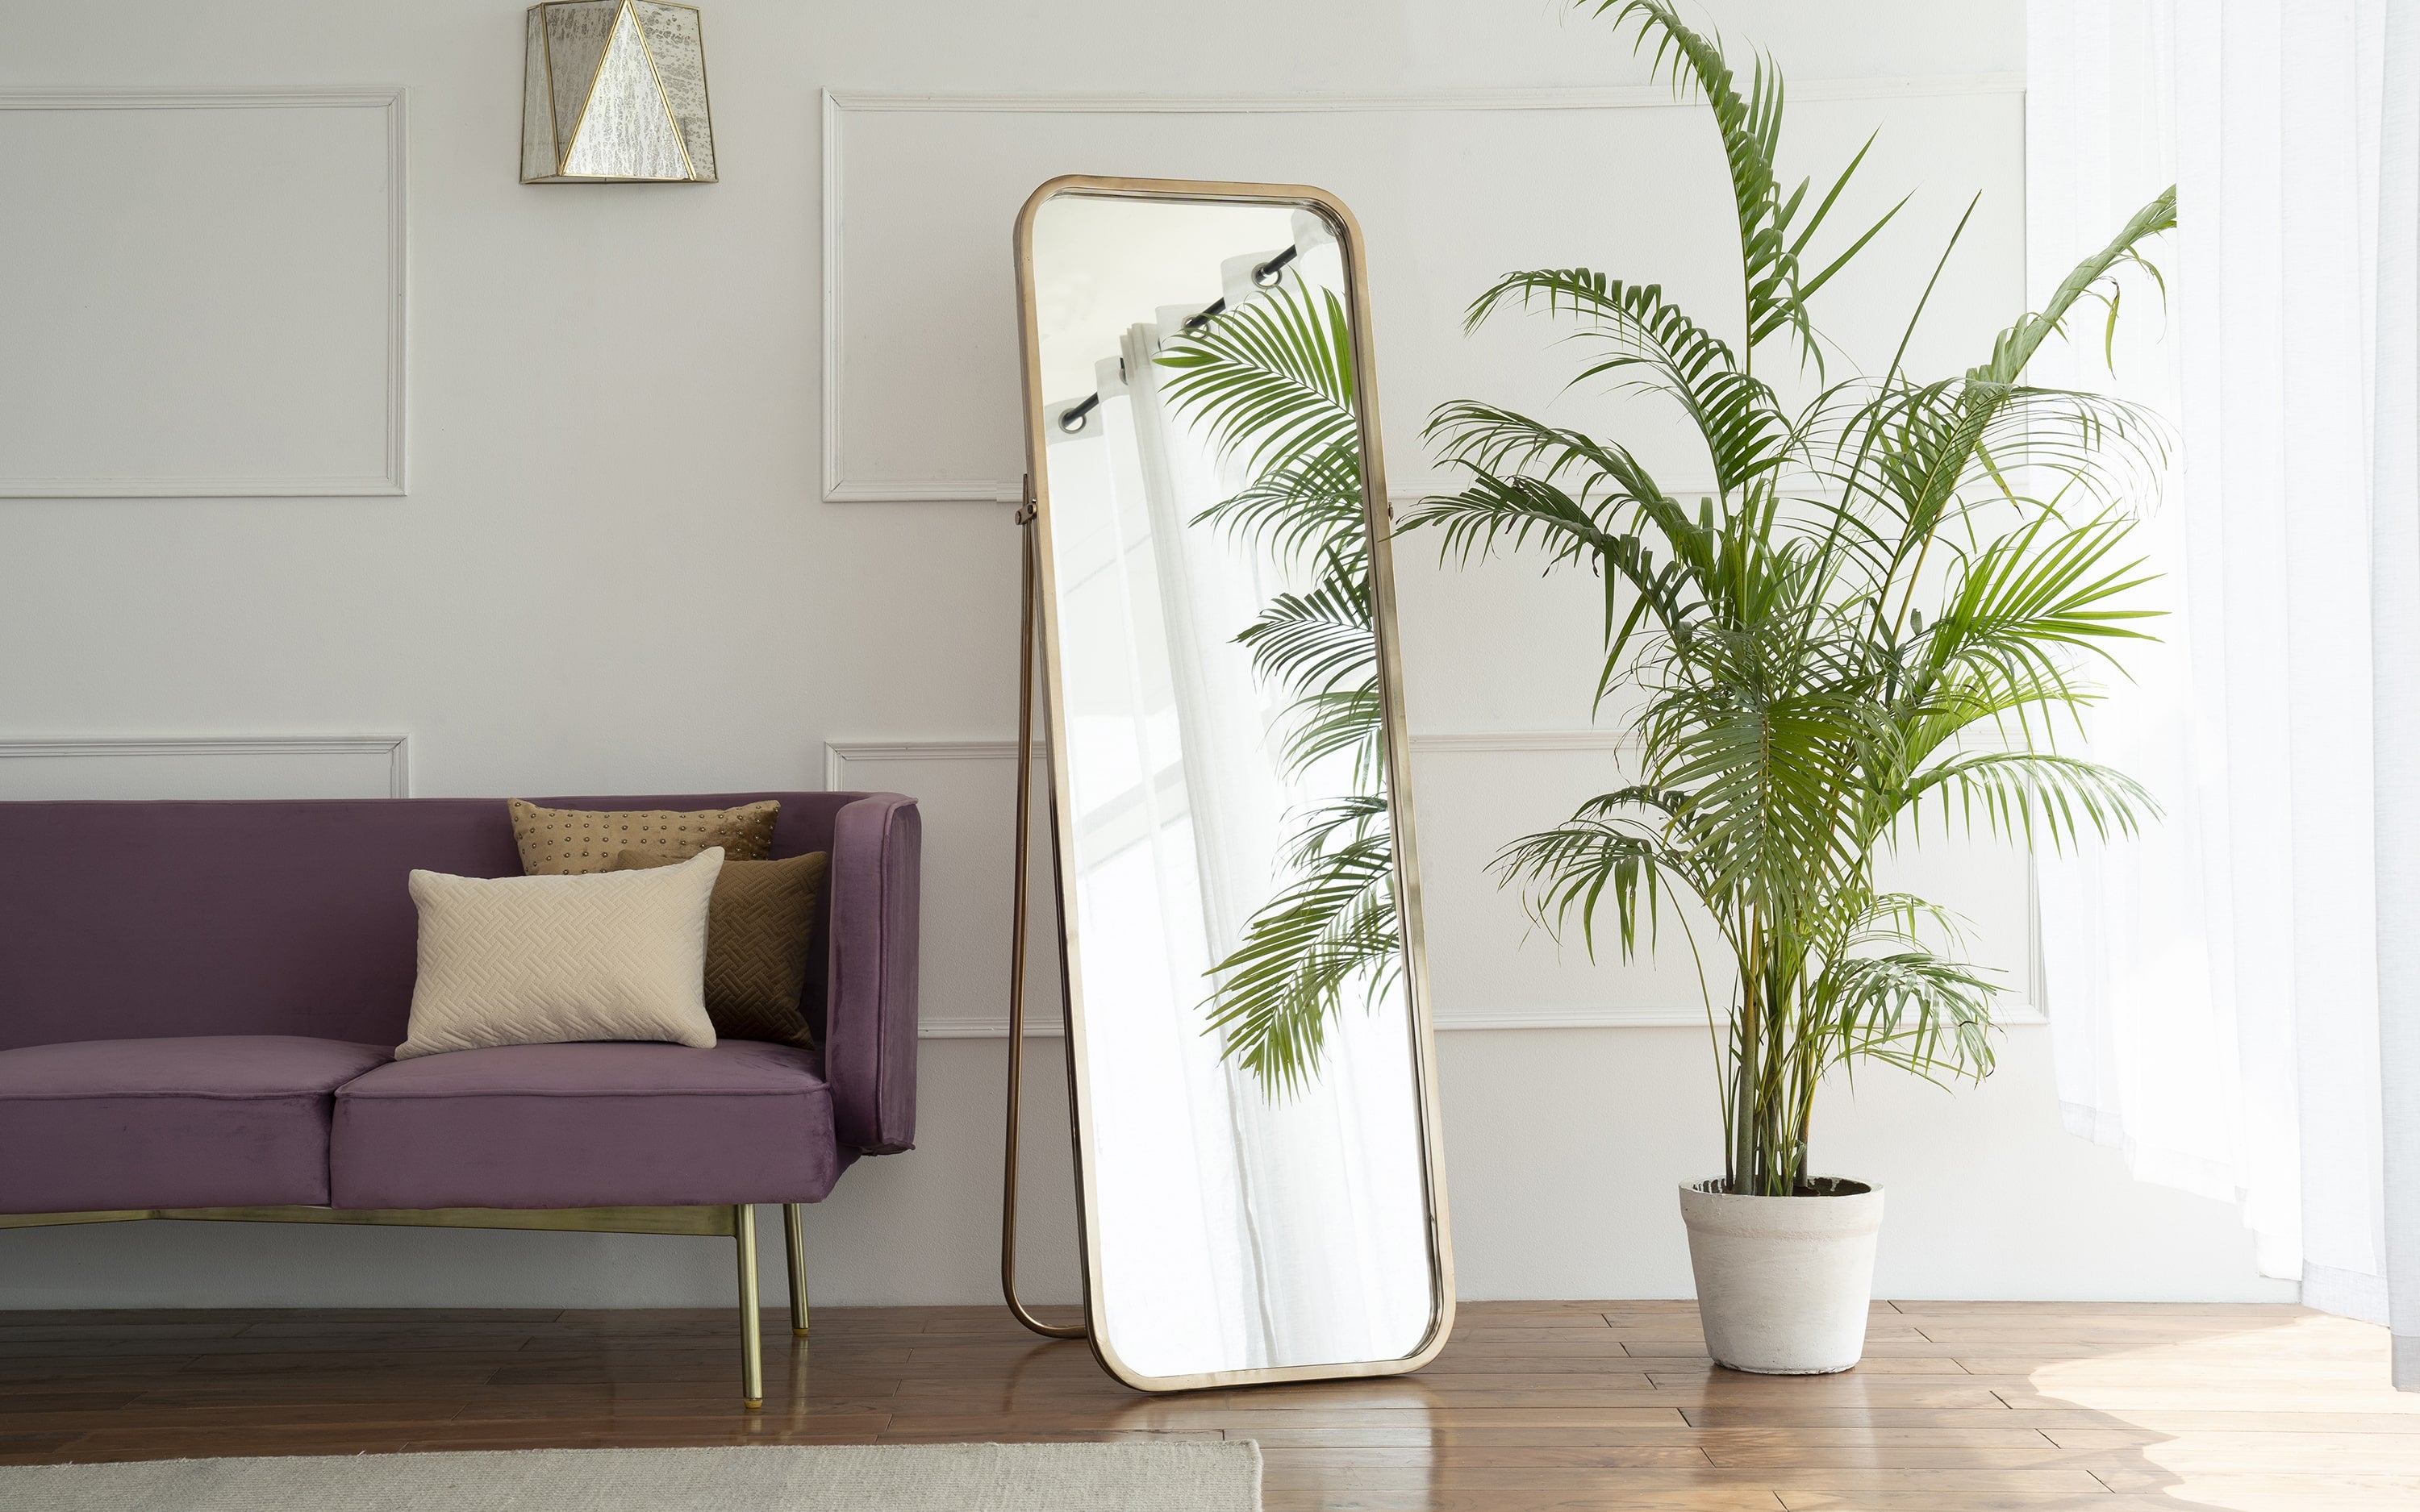 yoho full length mirror in bedroom